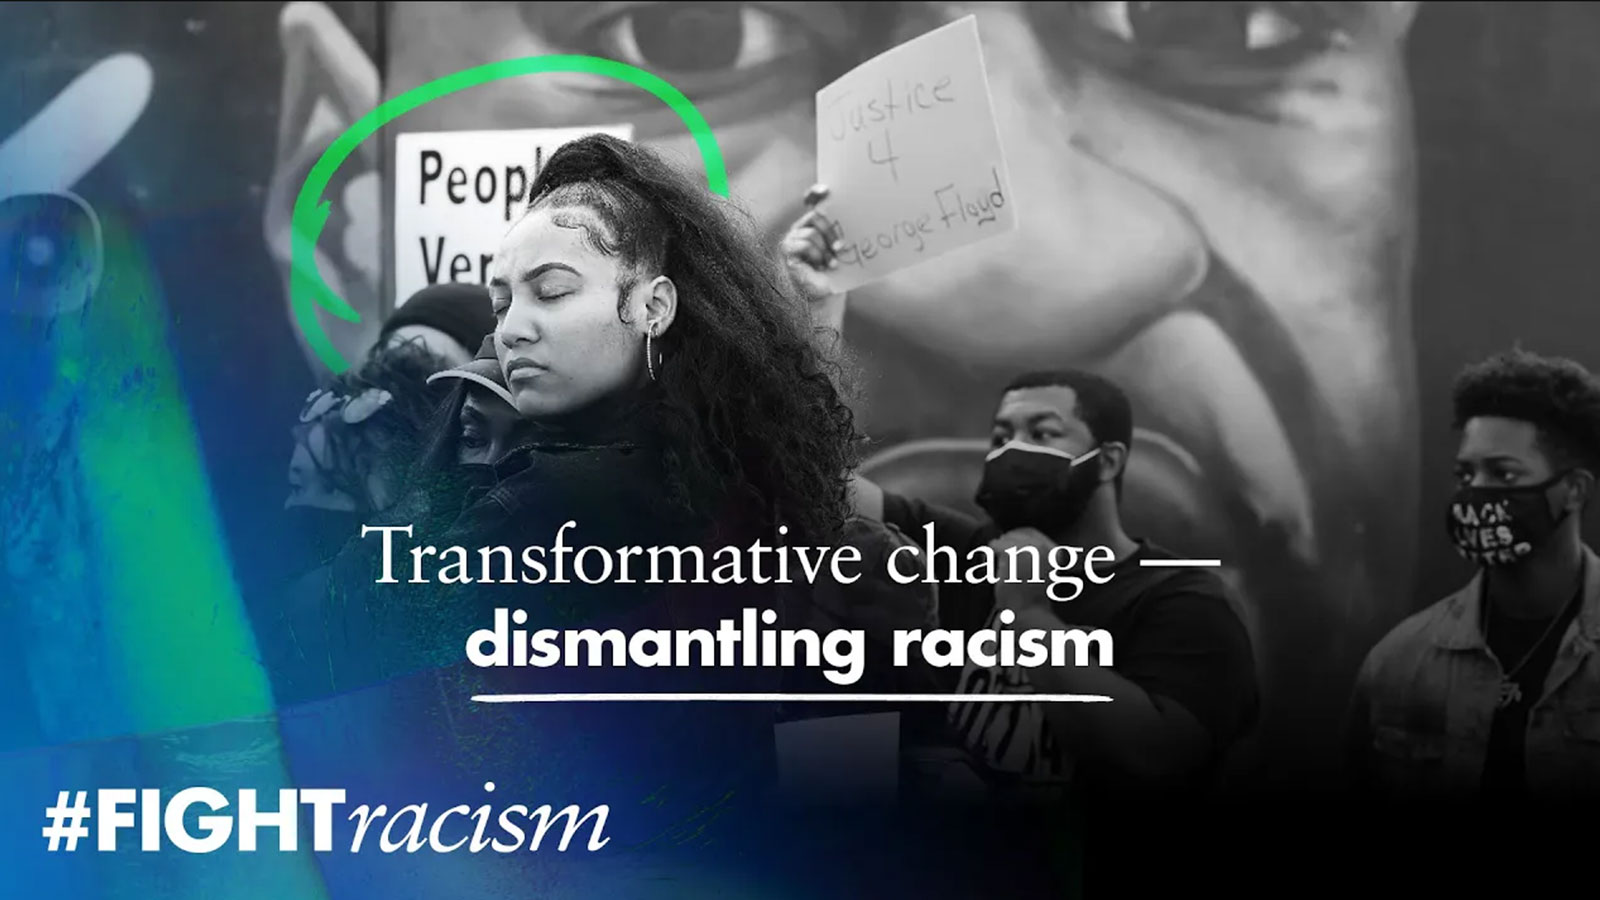 Video: Dismantling racism needs transformative change